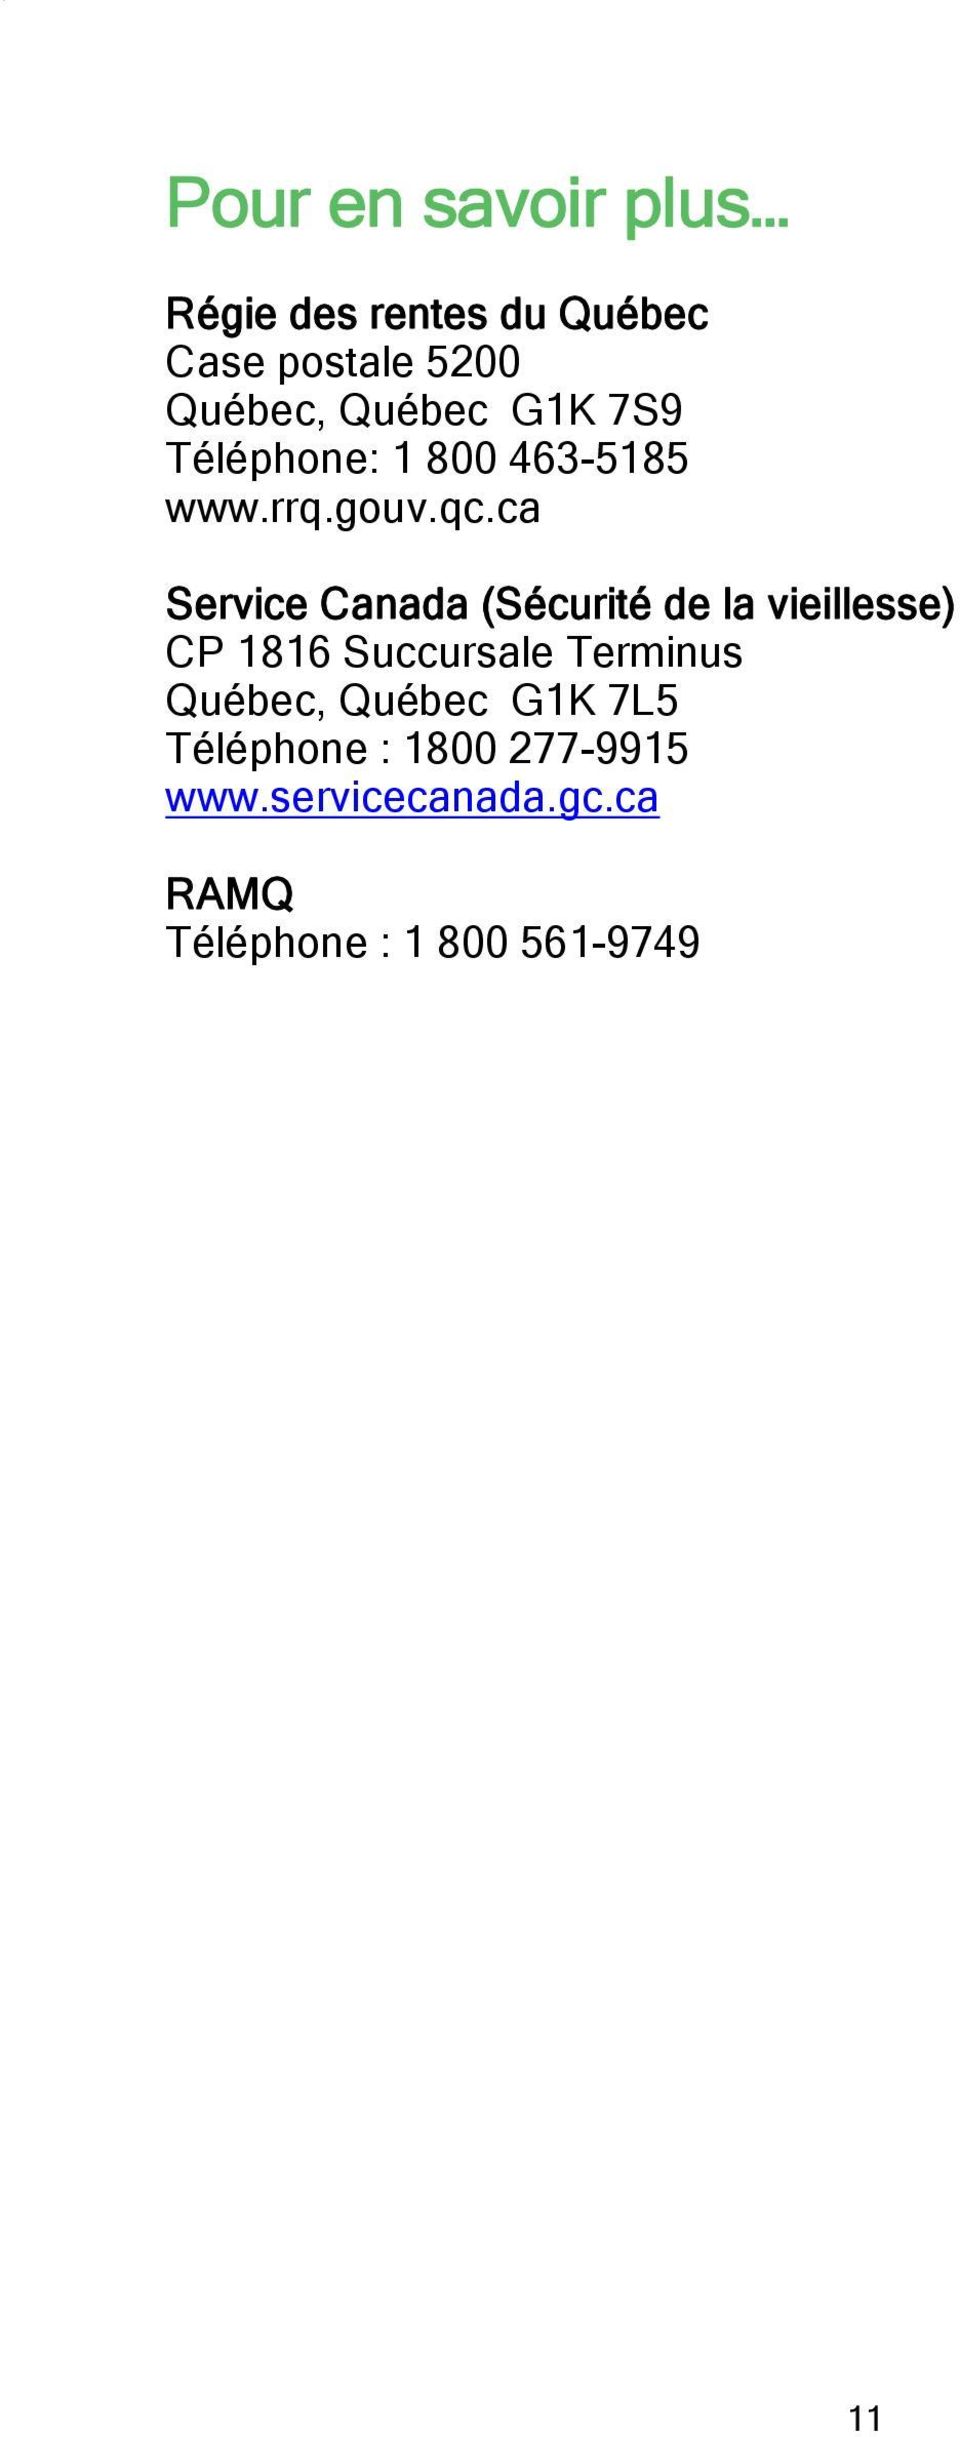 ca Service Canada (Sécurité de la vieillesse) CP 1816 Succursale Terminus